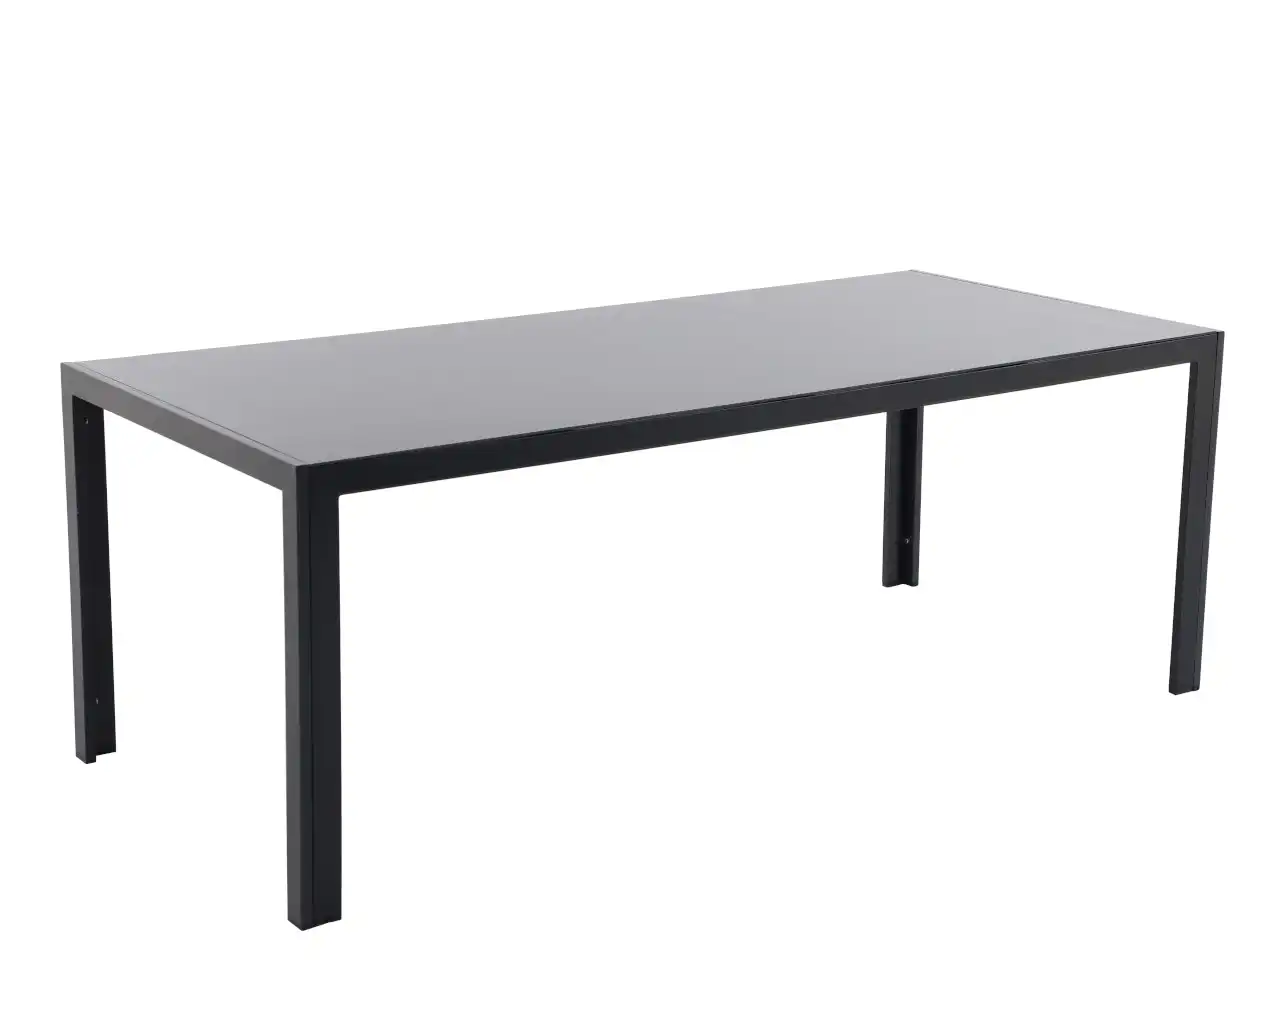 Malmo Dining Table - 200 x 90 cm